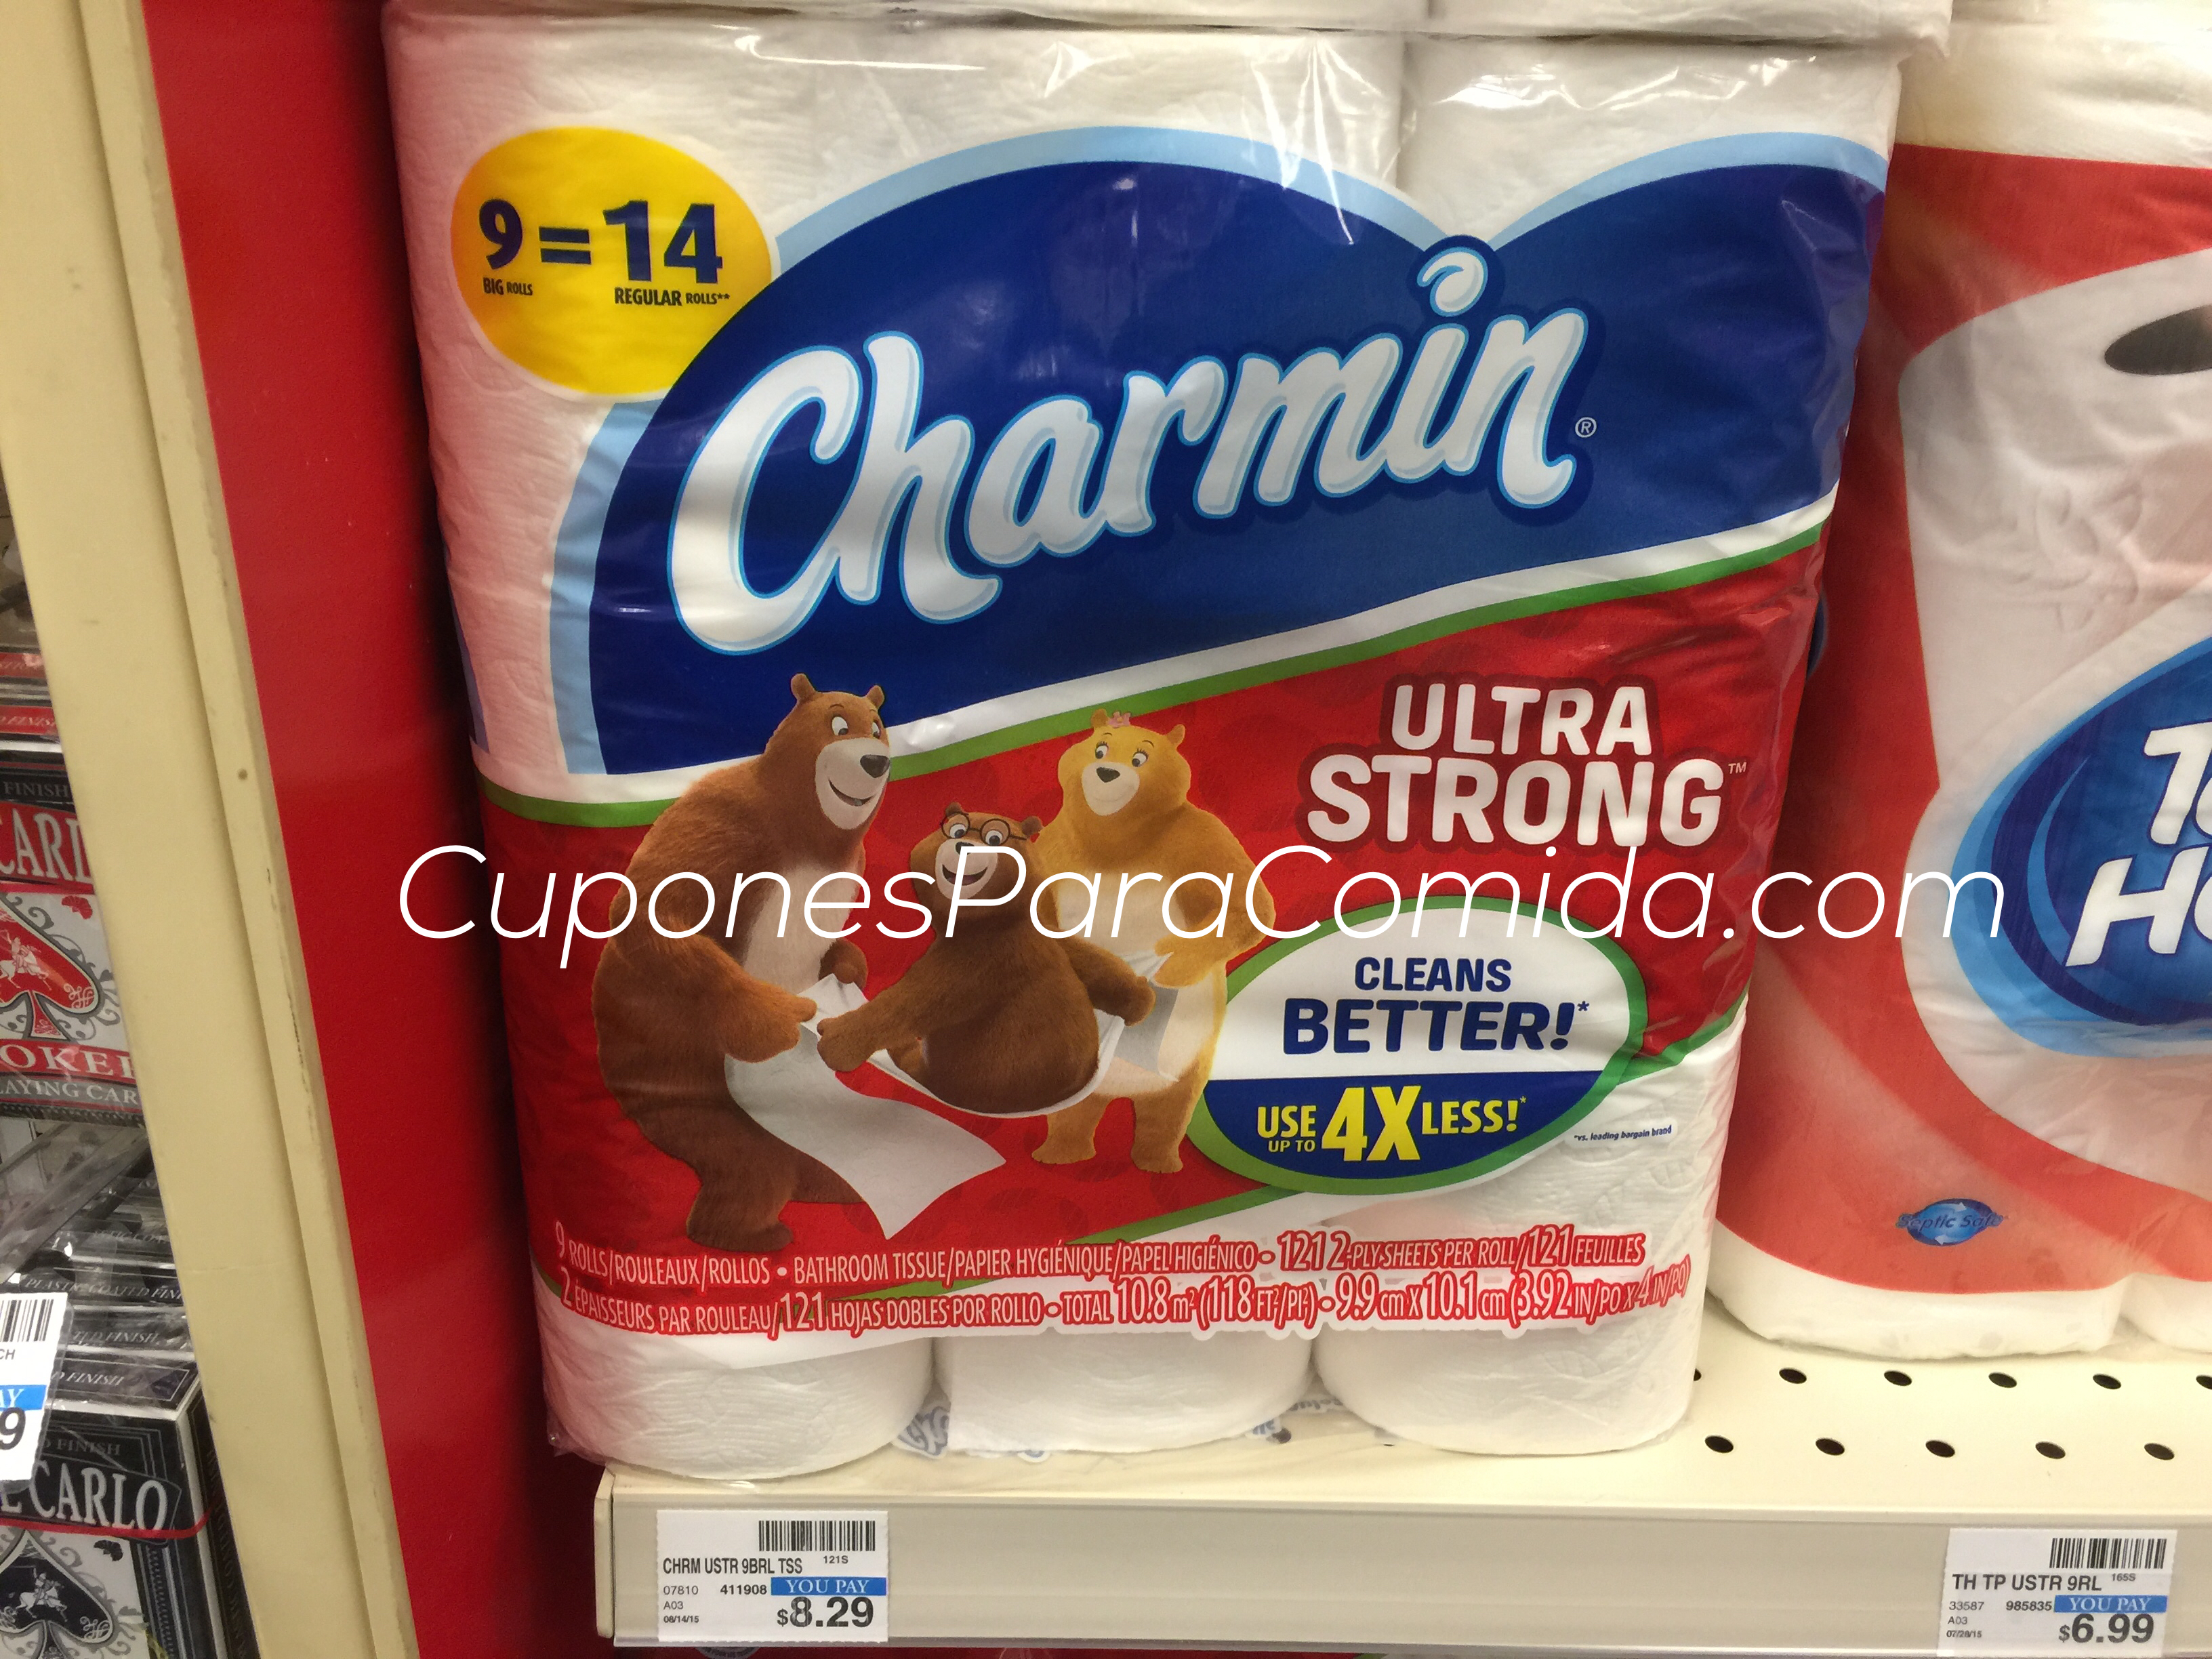 Charmin Ultra Strong 9 big rolls - 10/29/15